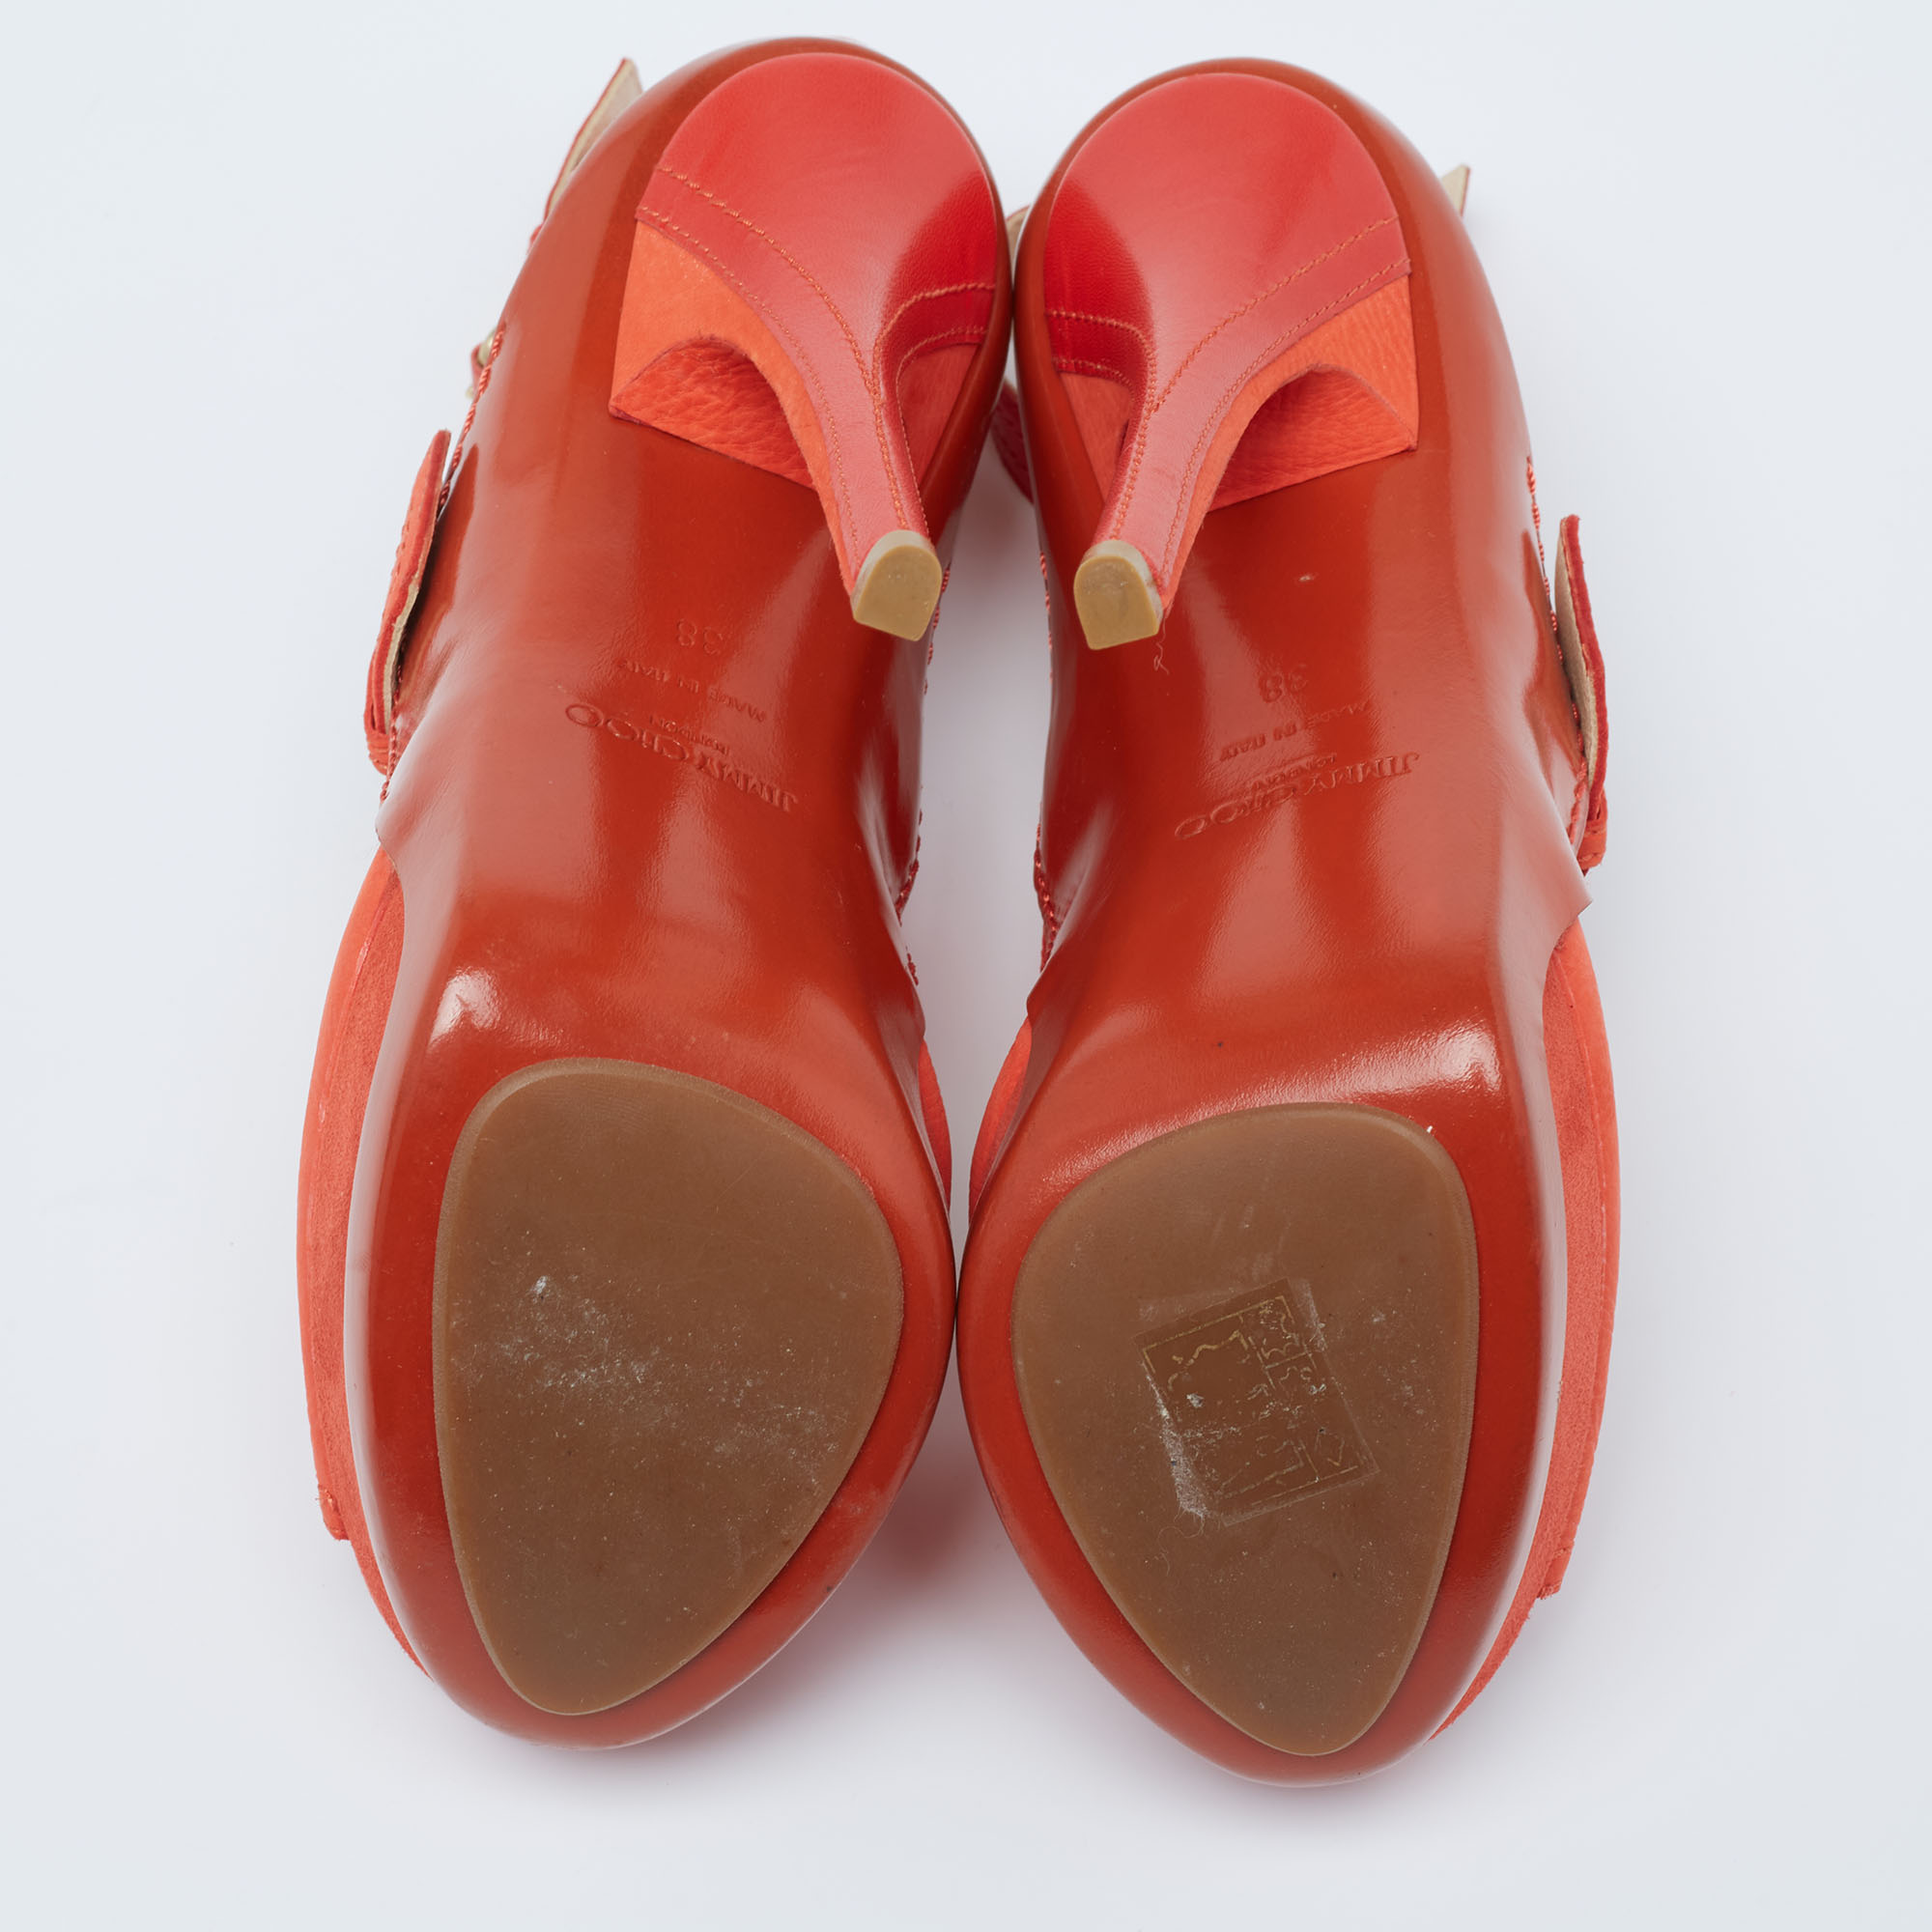 Jimmy Choo Orange Leather And Nubuck Platform Peep Toe Sandals Size 38